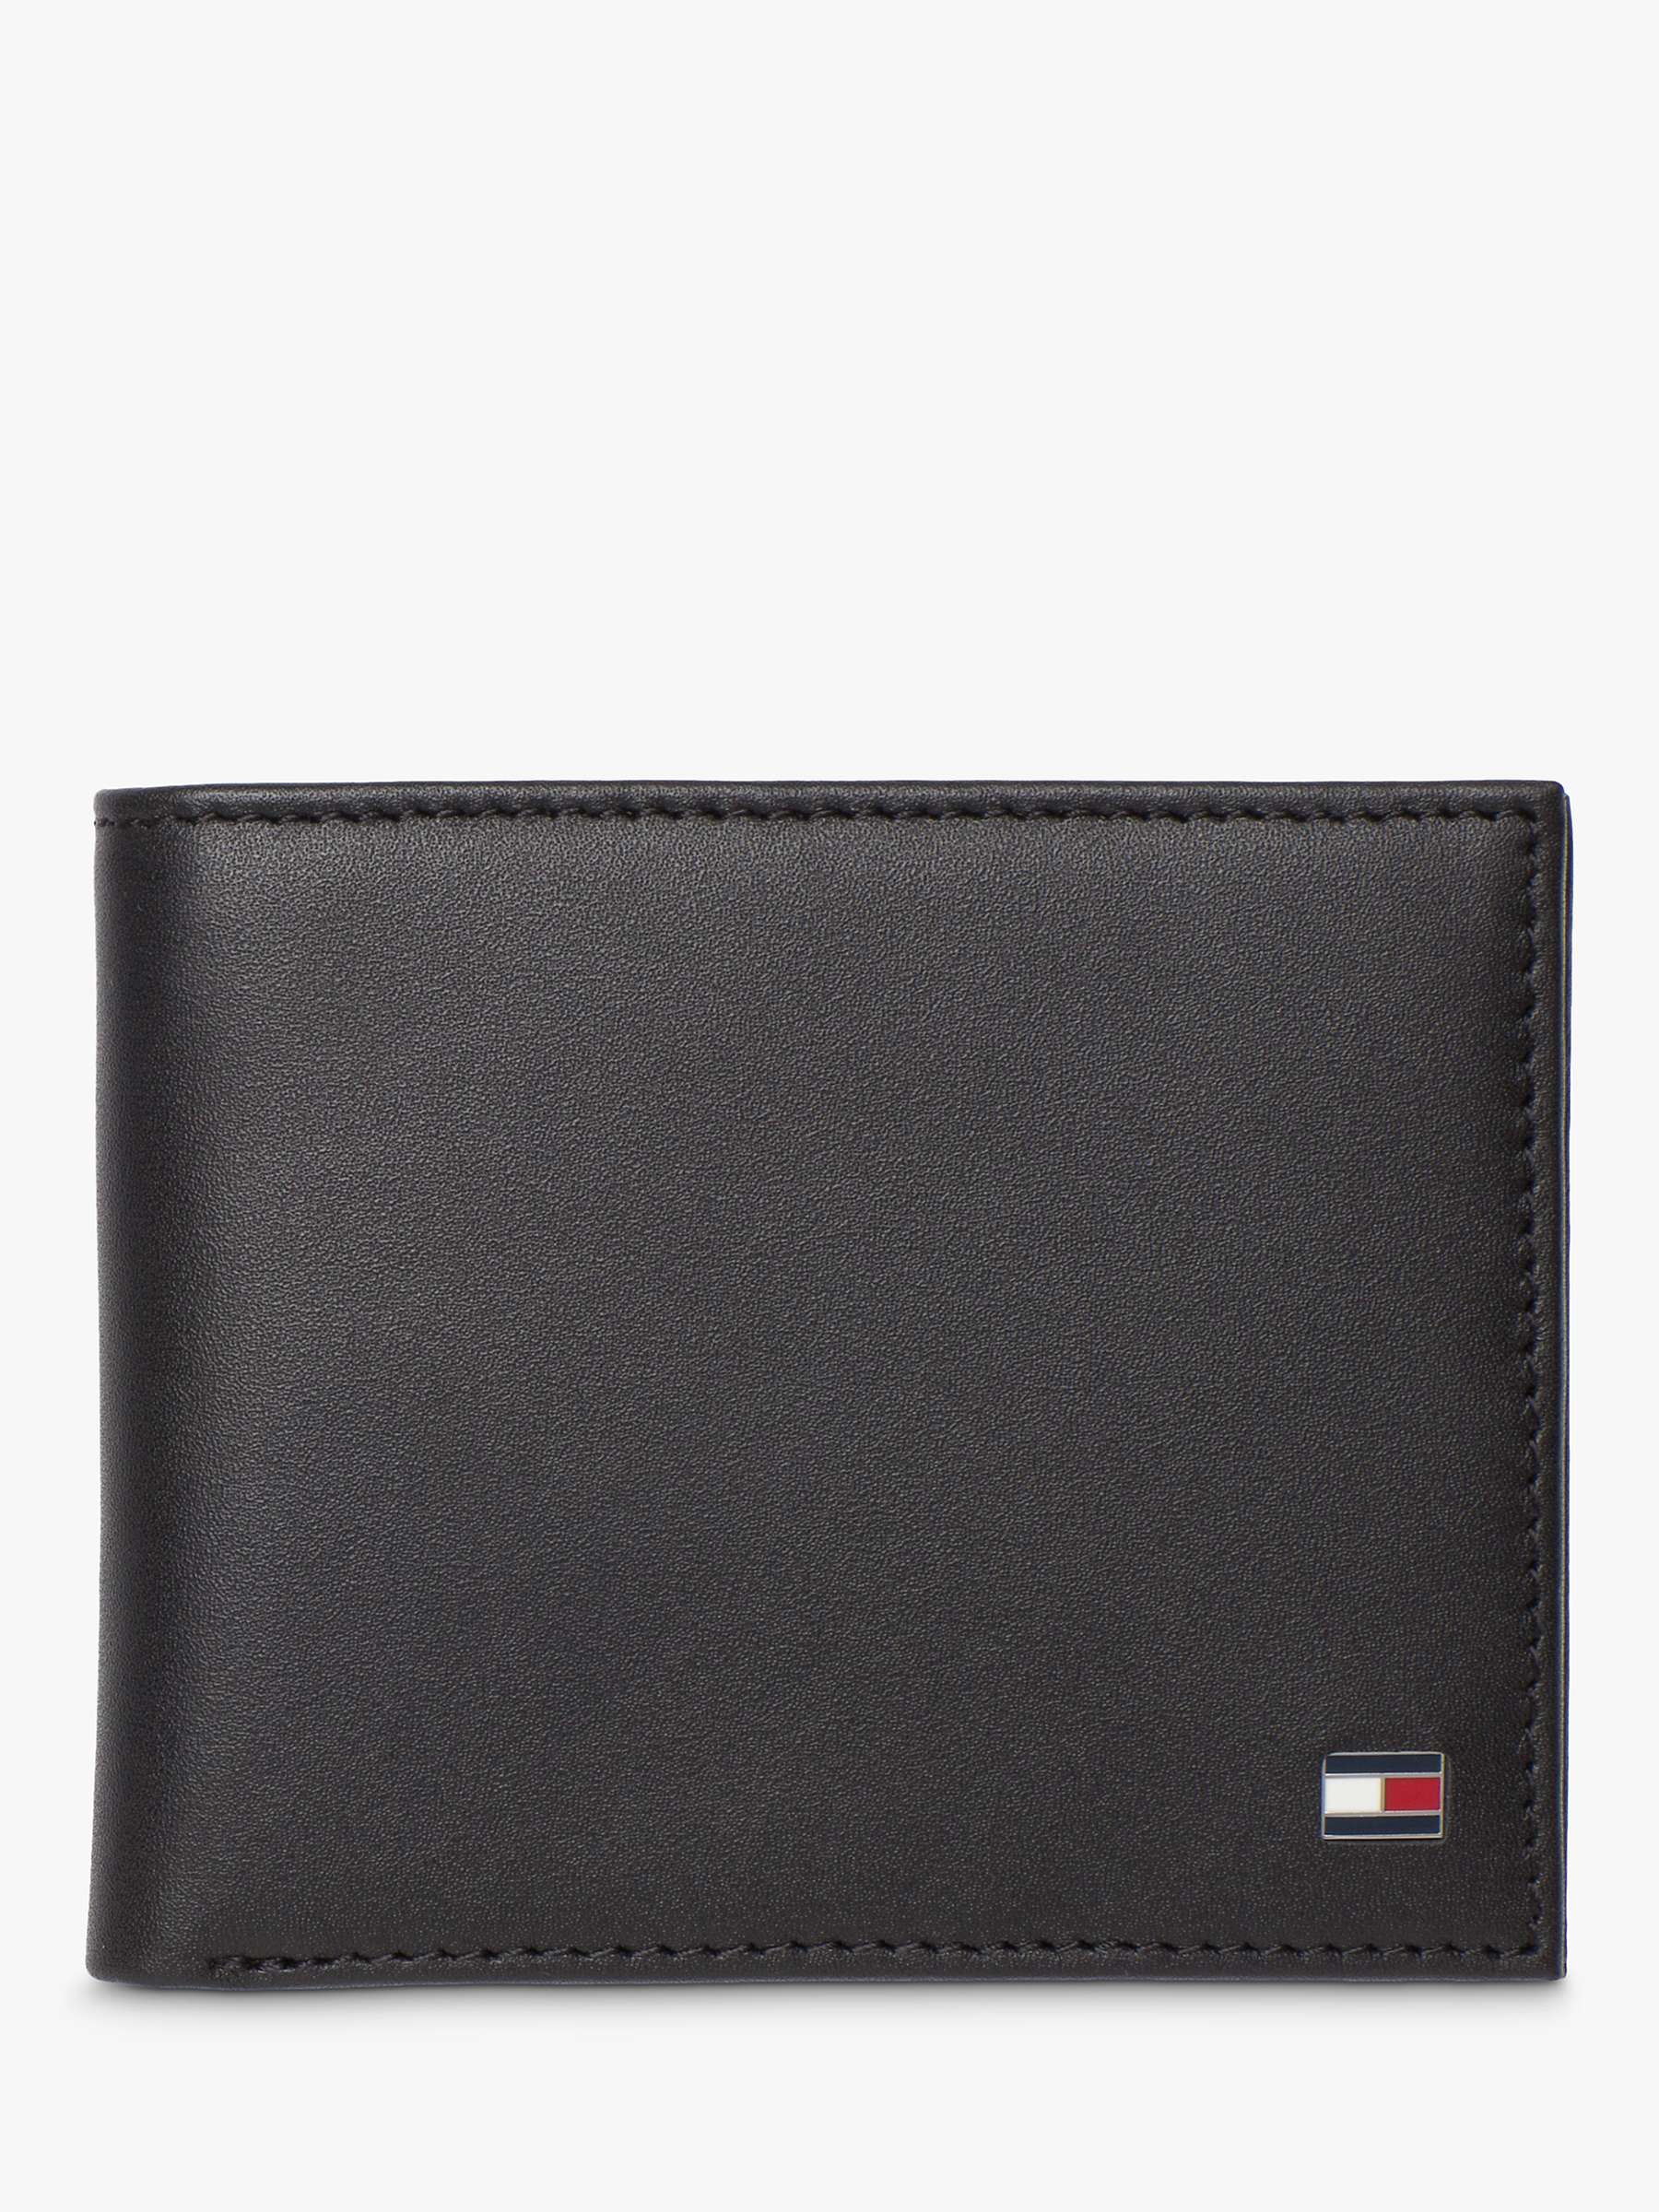 Buy Tommy Hilfiger Eton Leather Mini Wallet Online at johnlewis.com